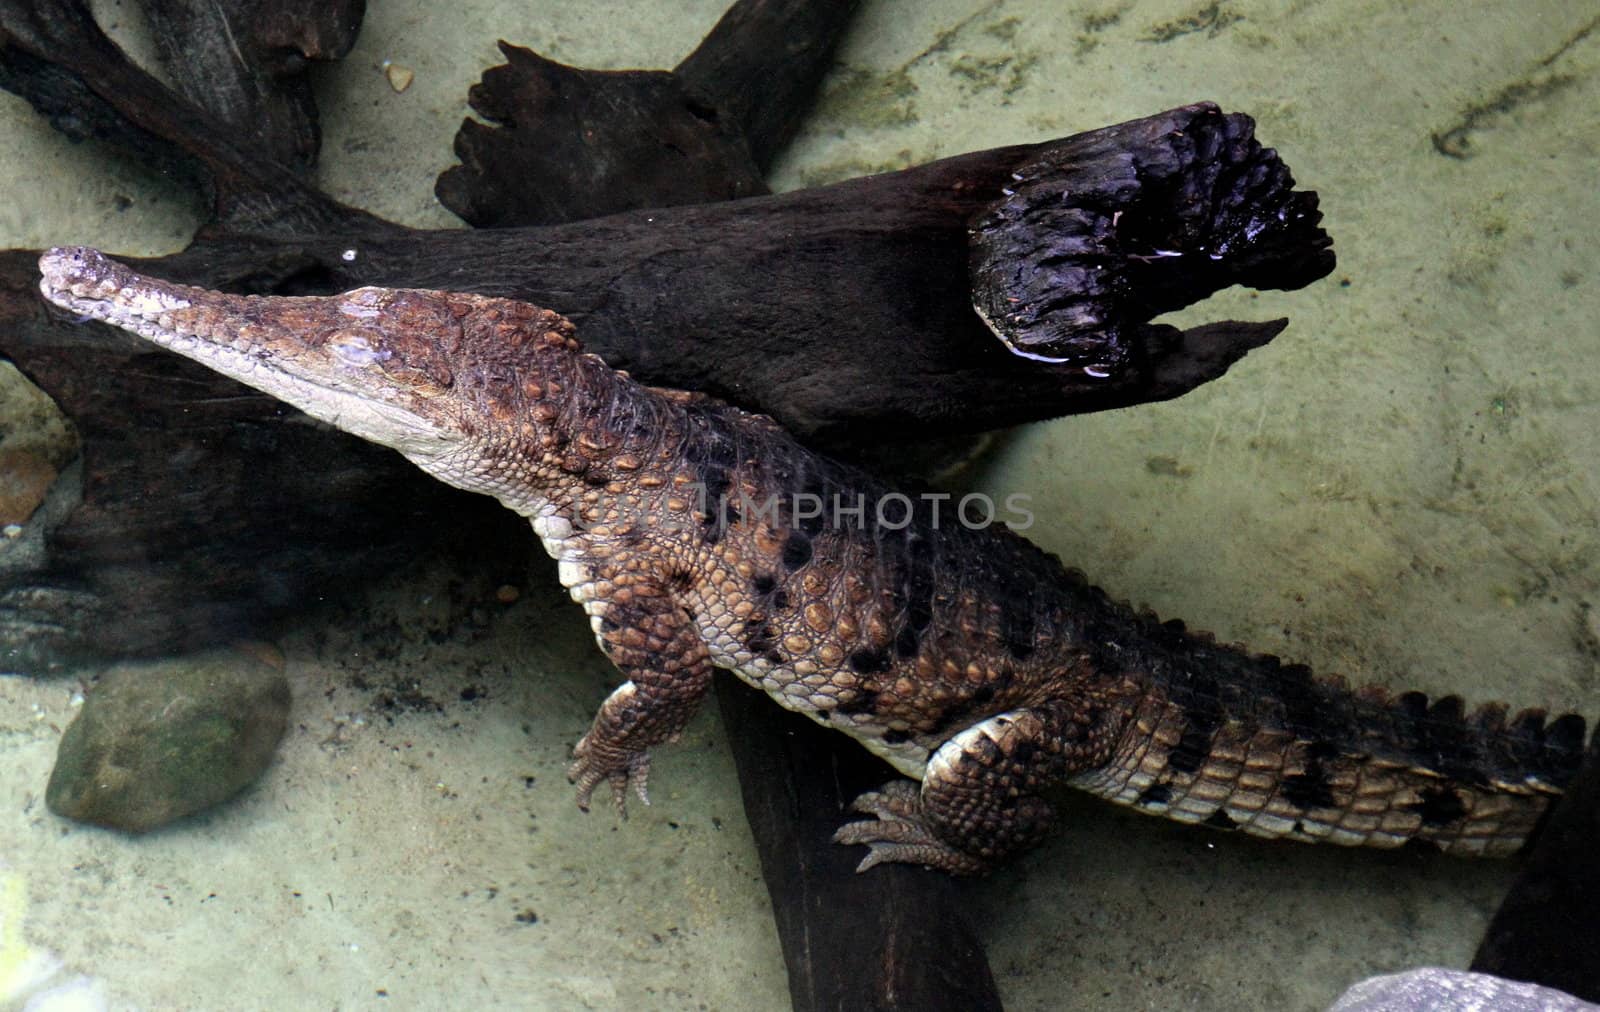 Australian Freshwater Crocodile submerged in water